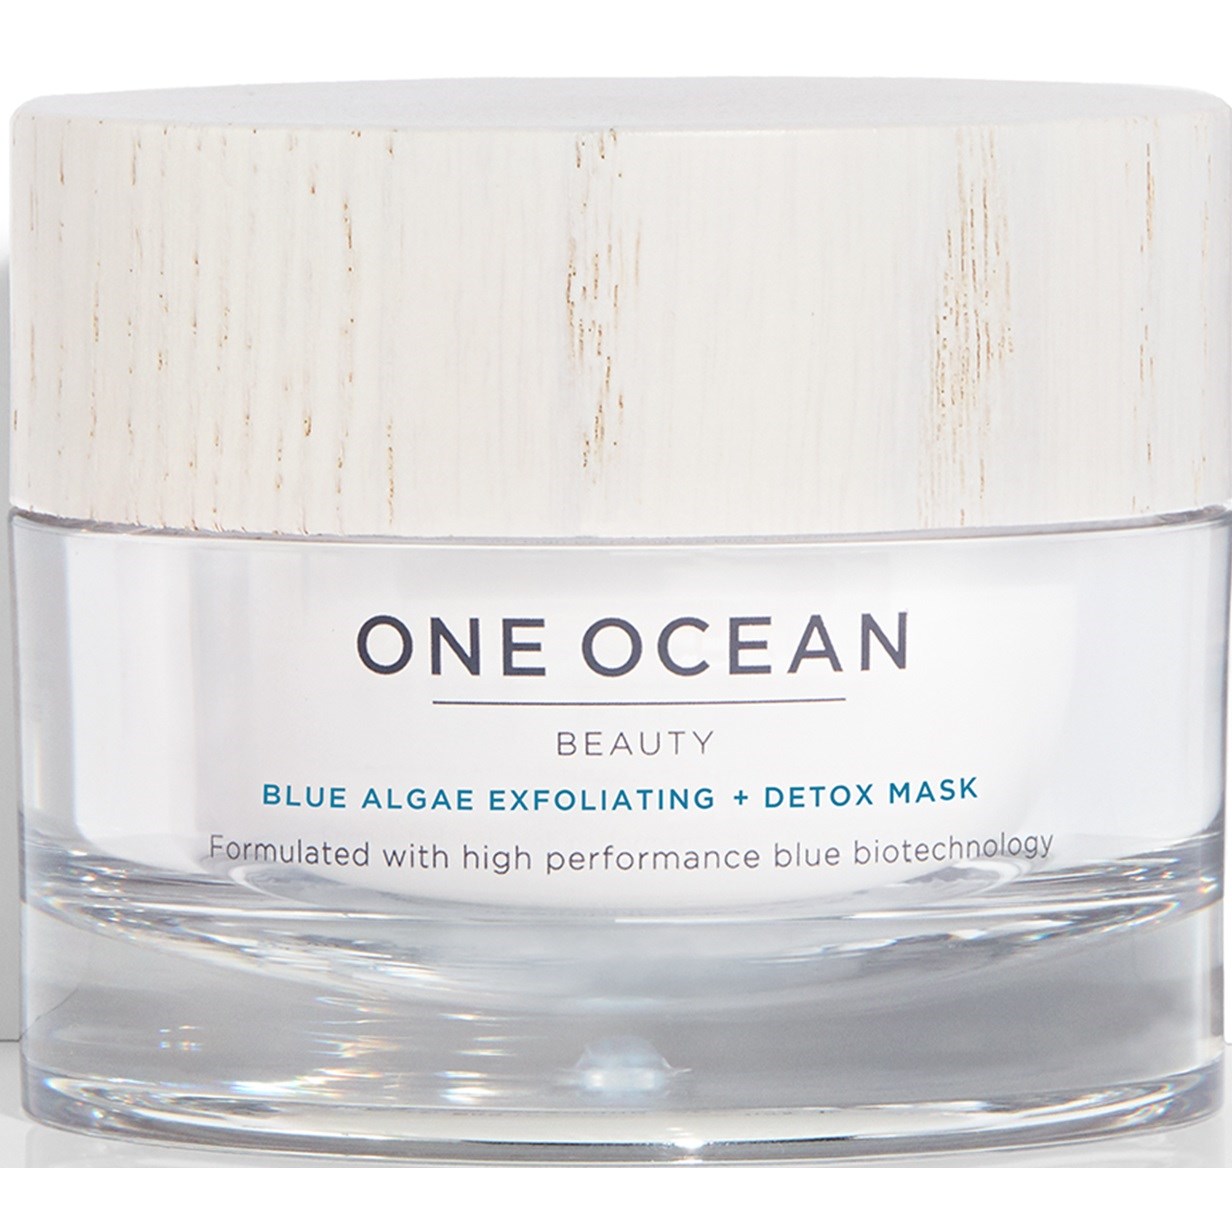 One Ocean Beauty Blue Algae Exfoliating + Detox Mask 50 ml